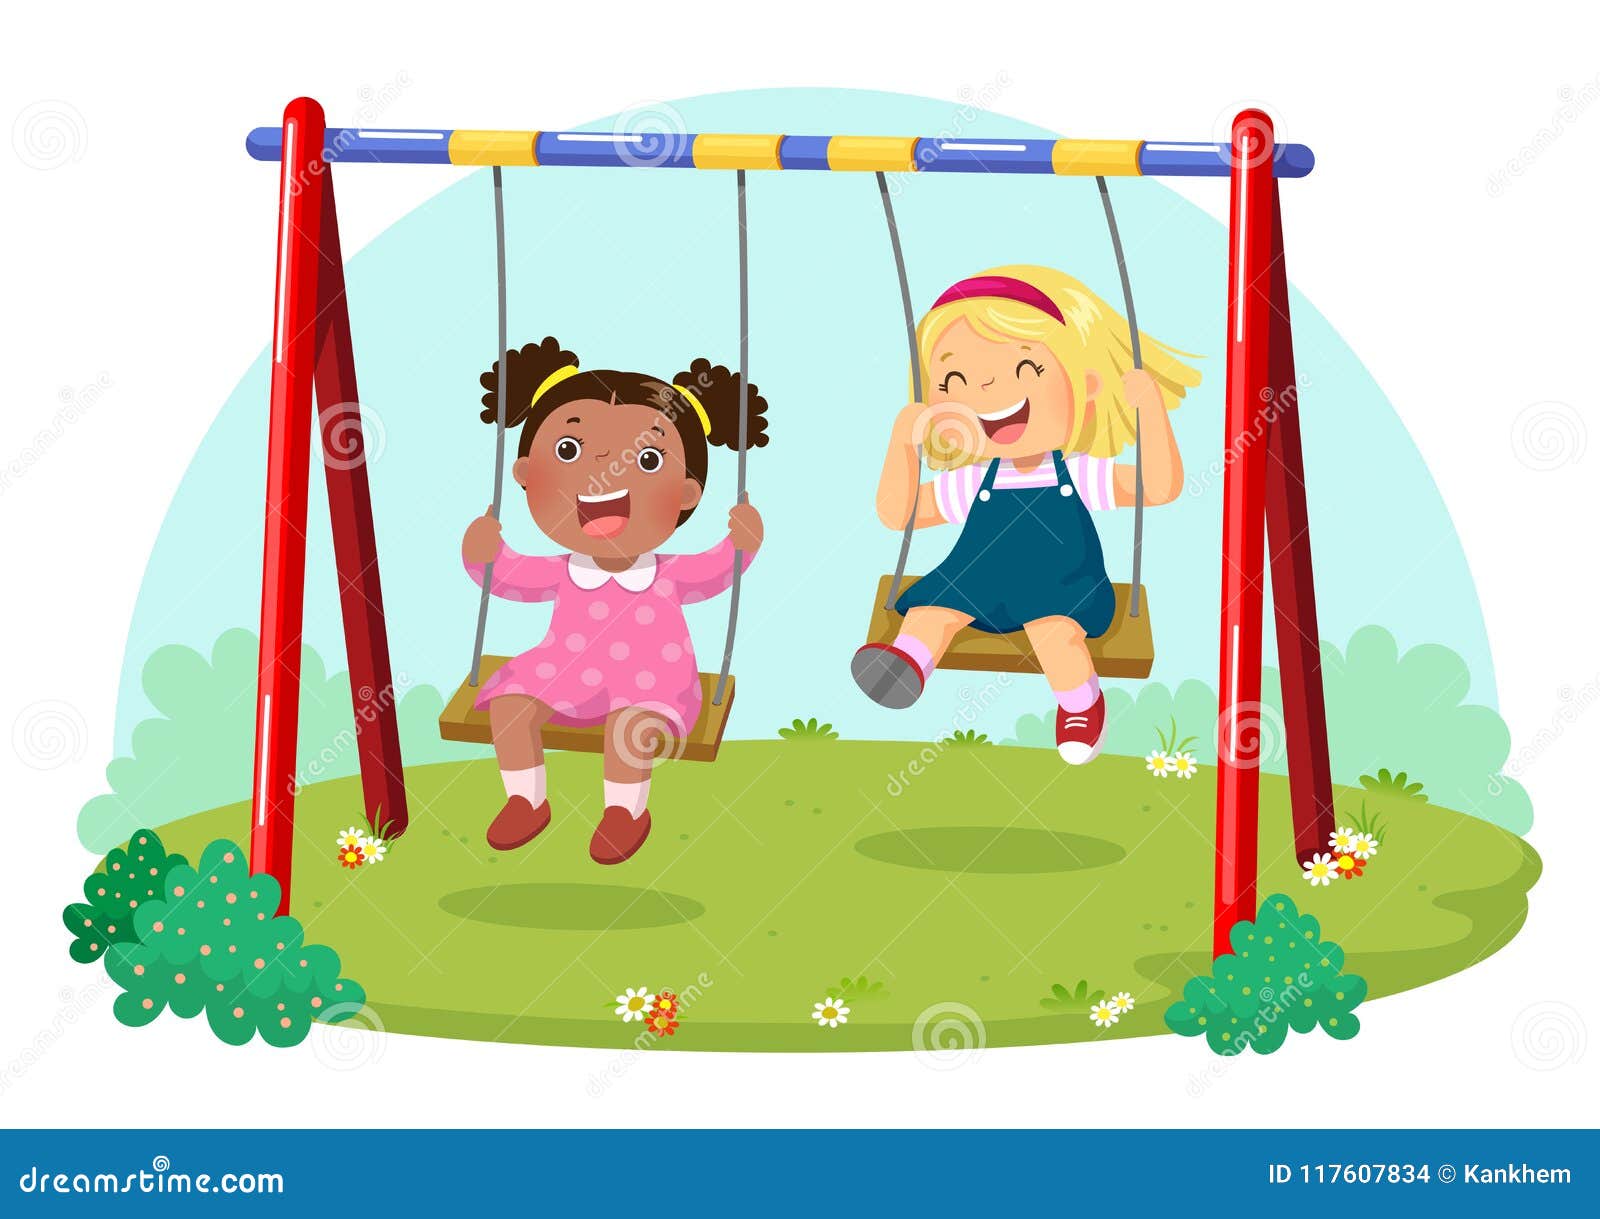 cute kids having fun on swing in playground